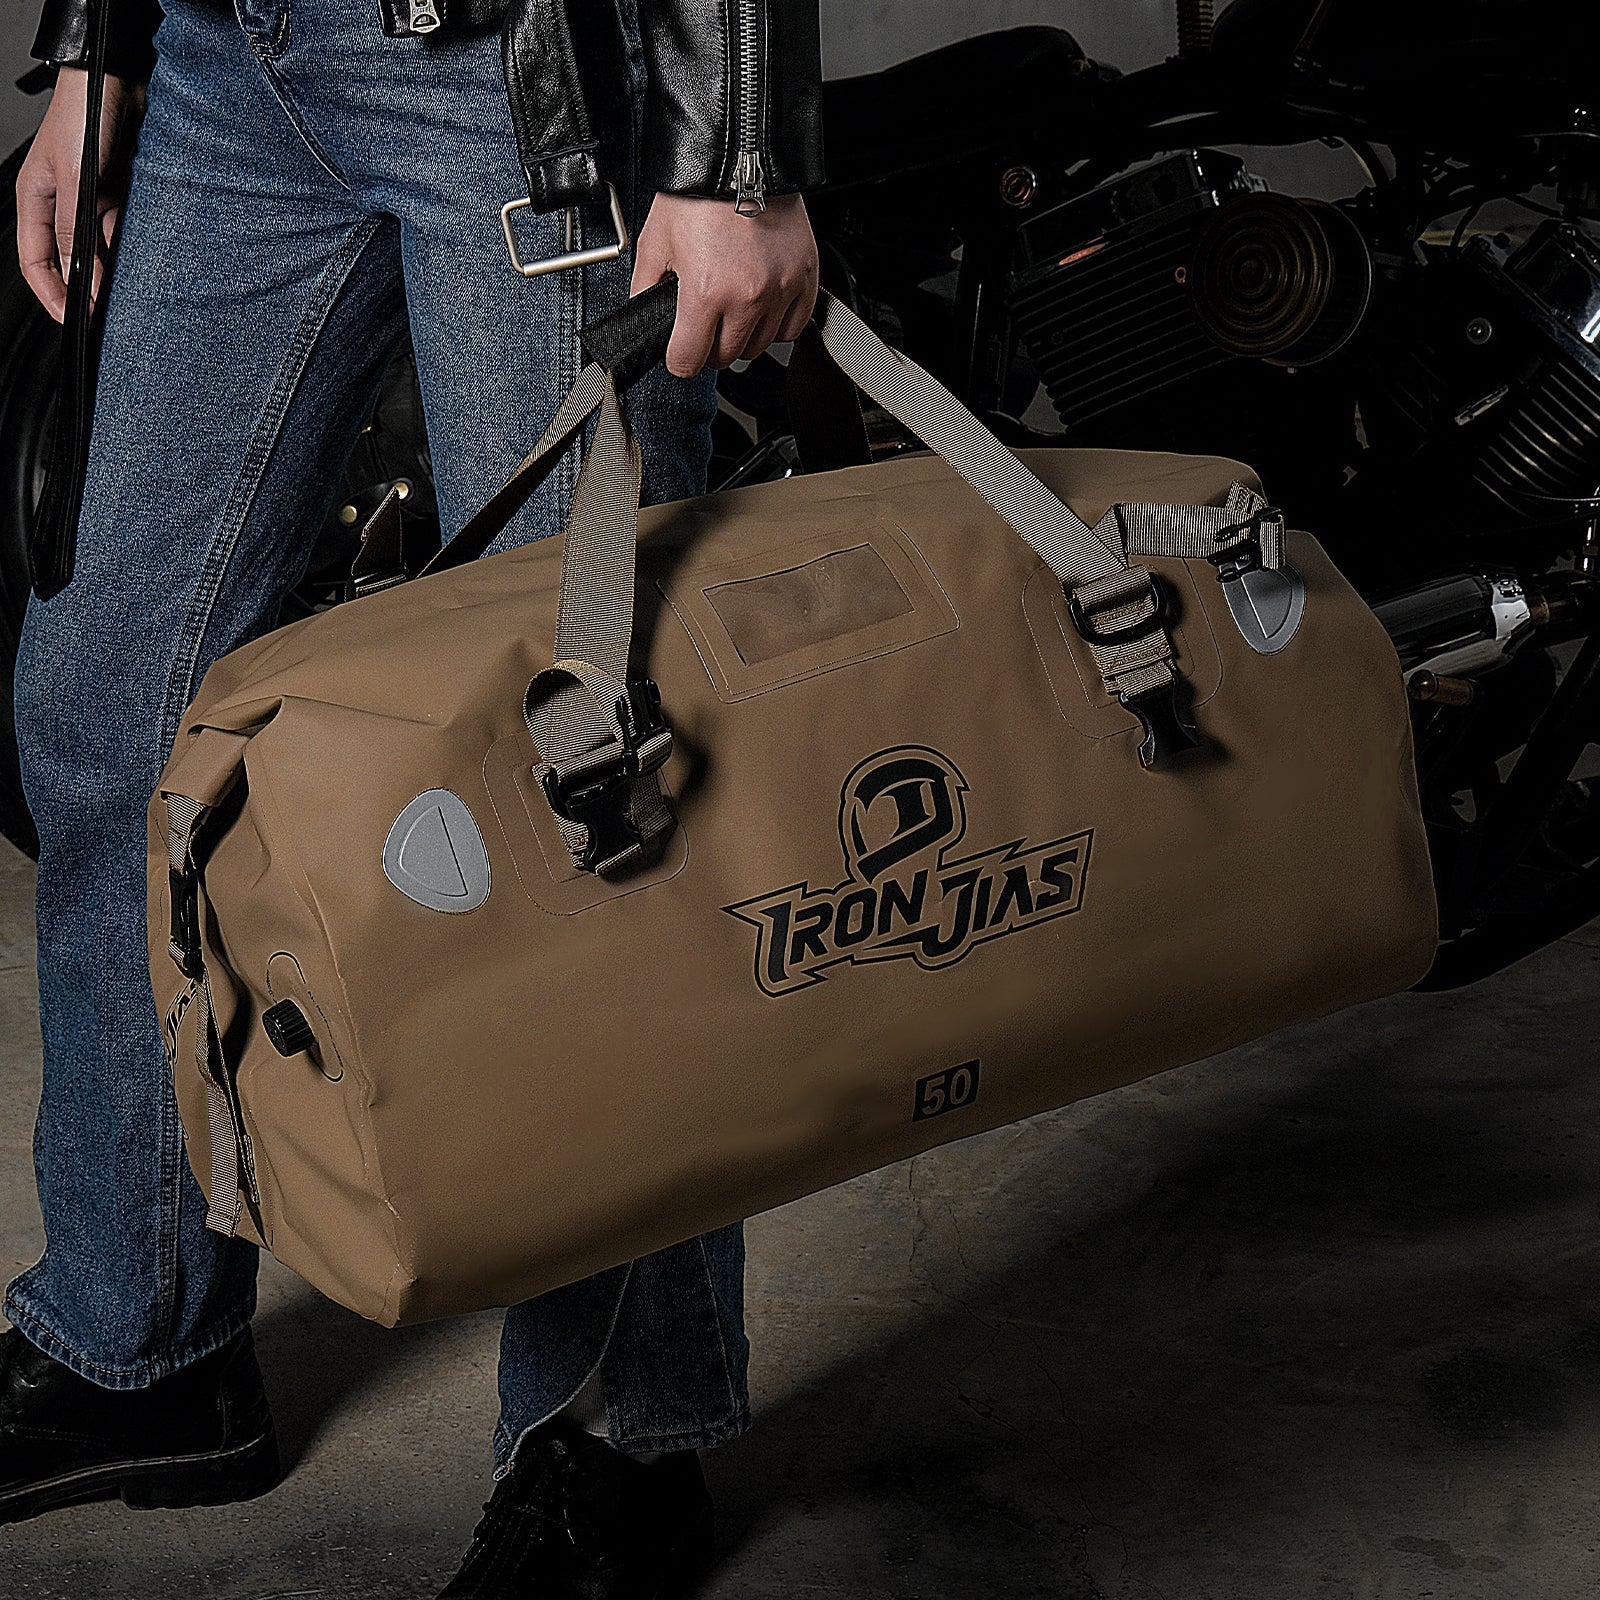 IRONJIAS Brown Large Capcacity Waterproof Motorcycle Travel Adventure Dry Bag